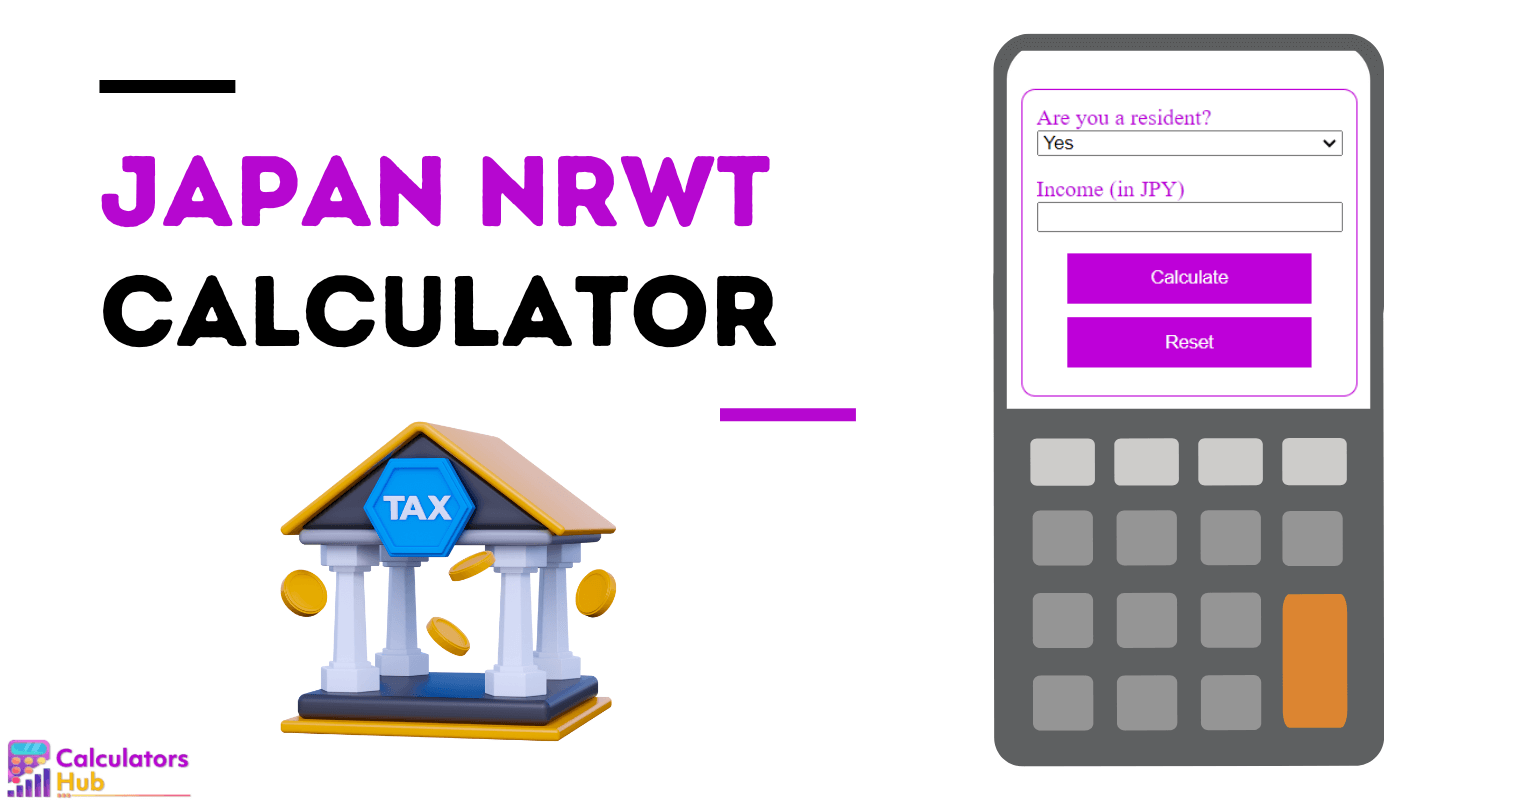 Japan NRWT Calculator